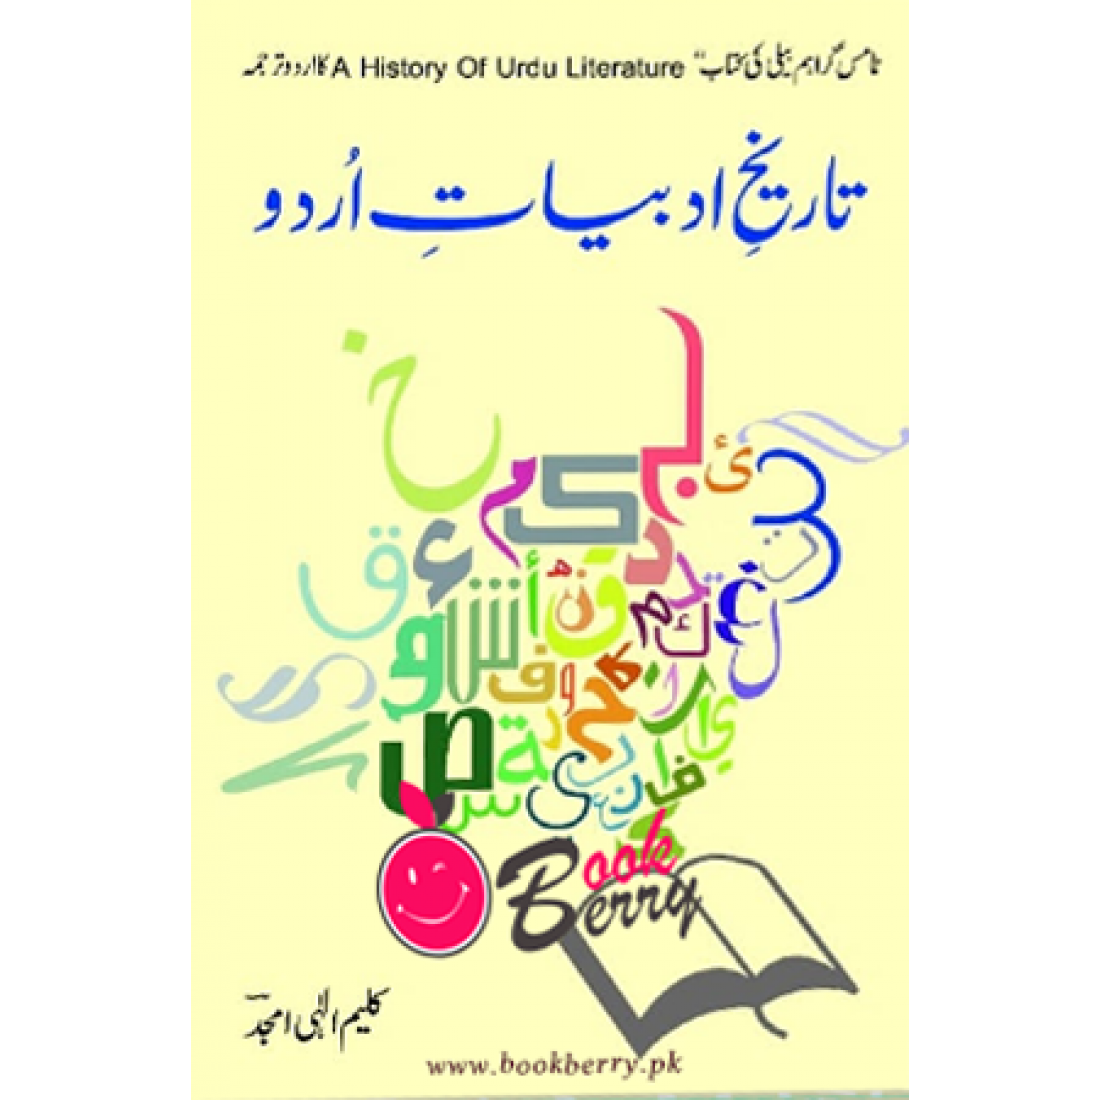 TAREEKH E ADBIYAT E URDU=A HISTORY OF URDU LITERATURE